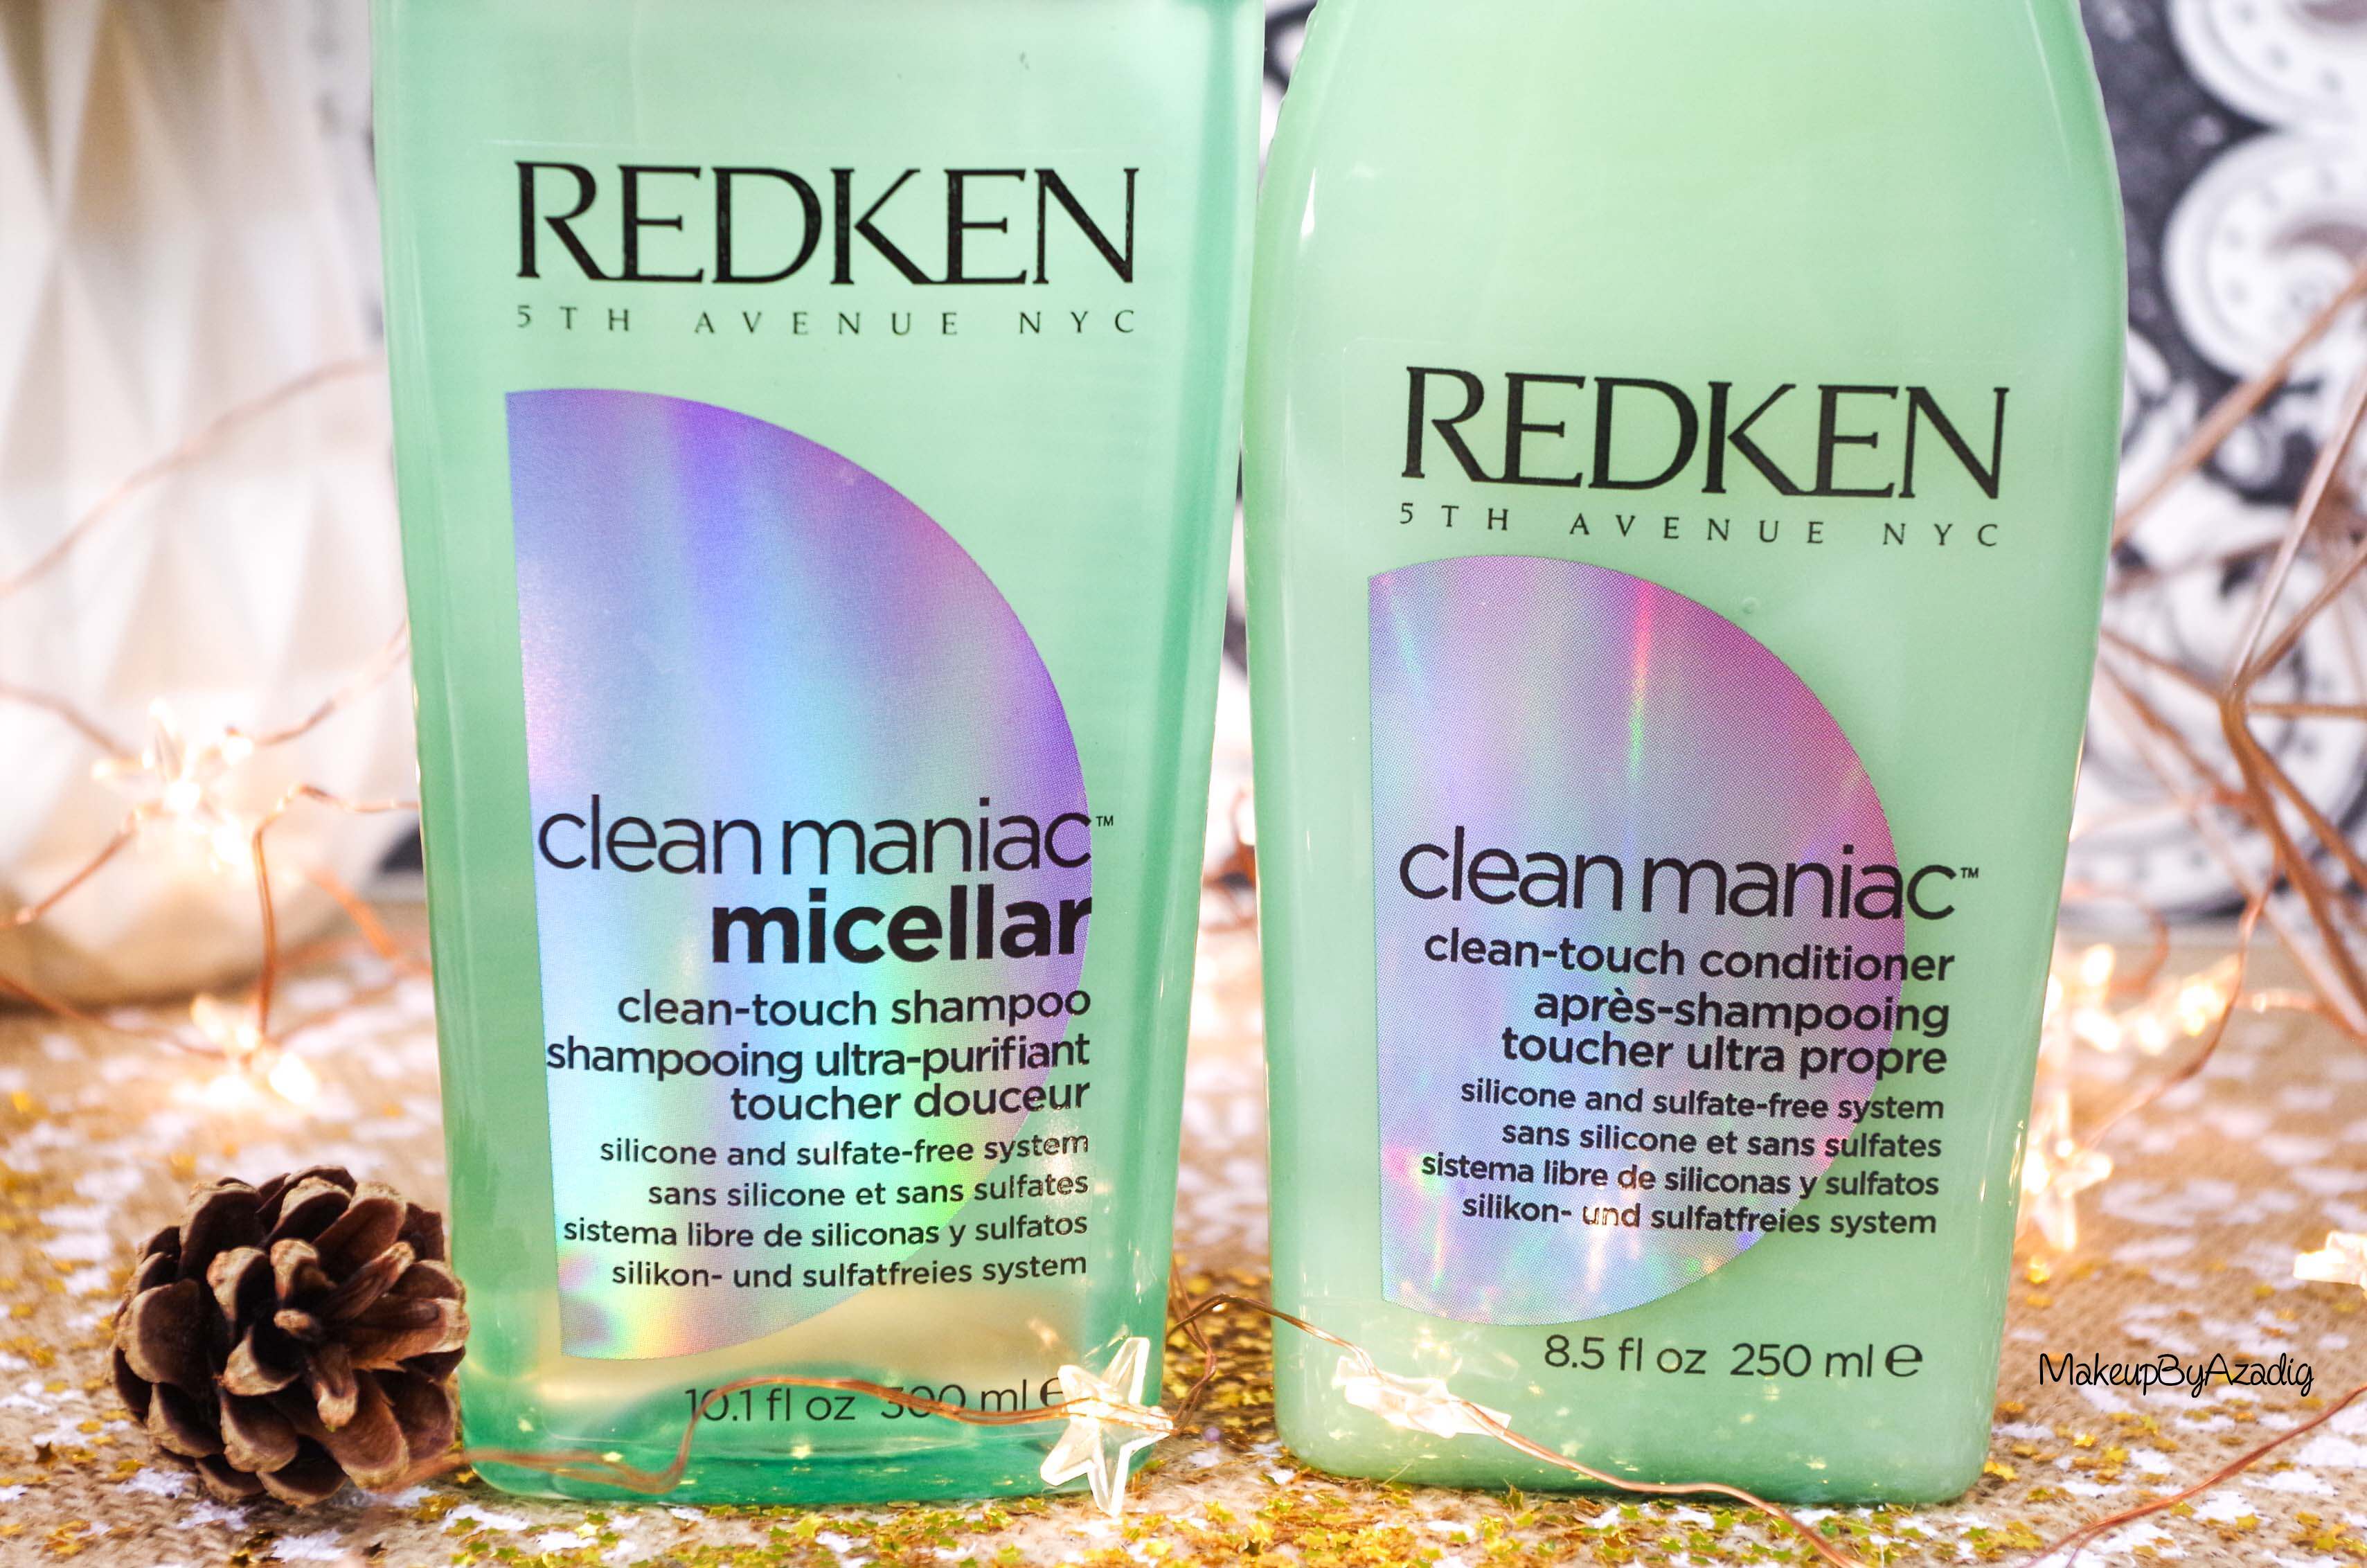 revue-shampooing-conditioner-clean-maniac-redken-programme-detox-anti-pollution-makeupbyazadig-cleanhair-sans-silicone-sulfate-avis